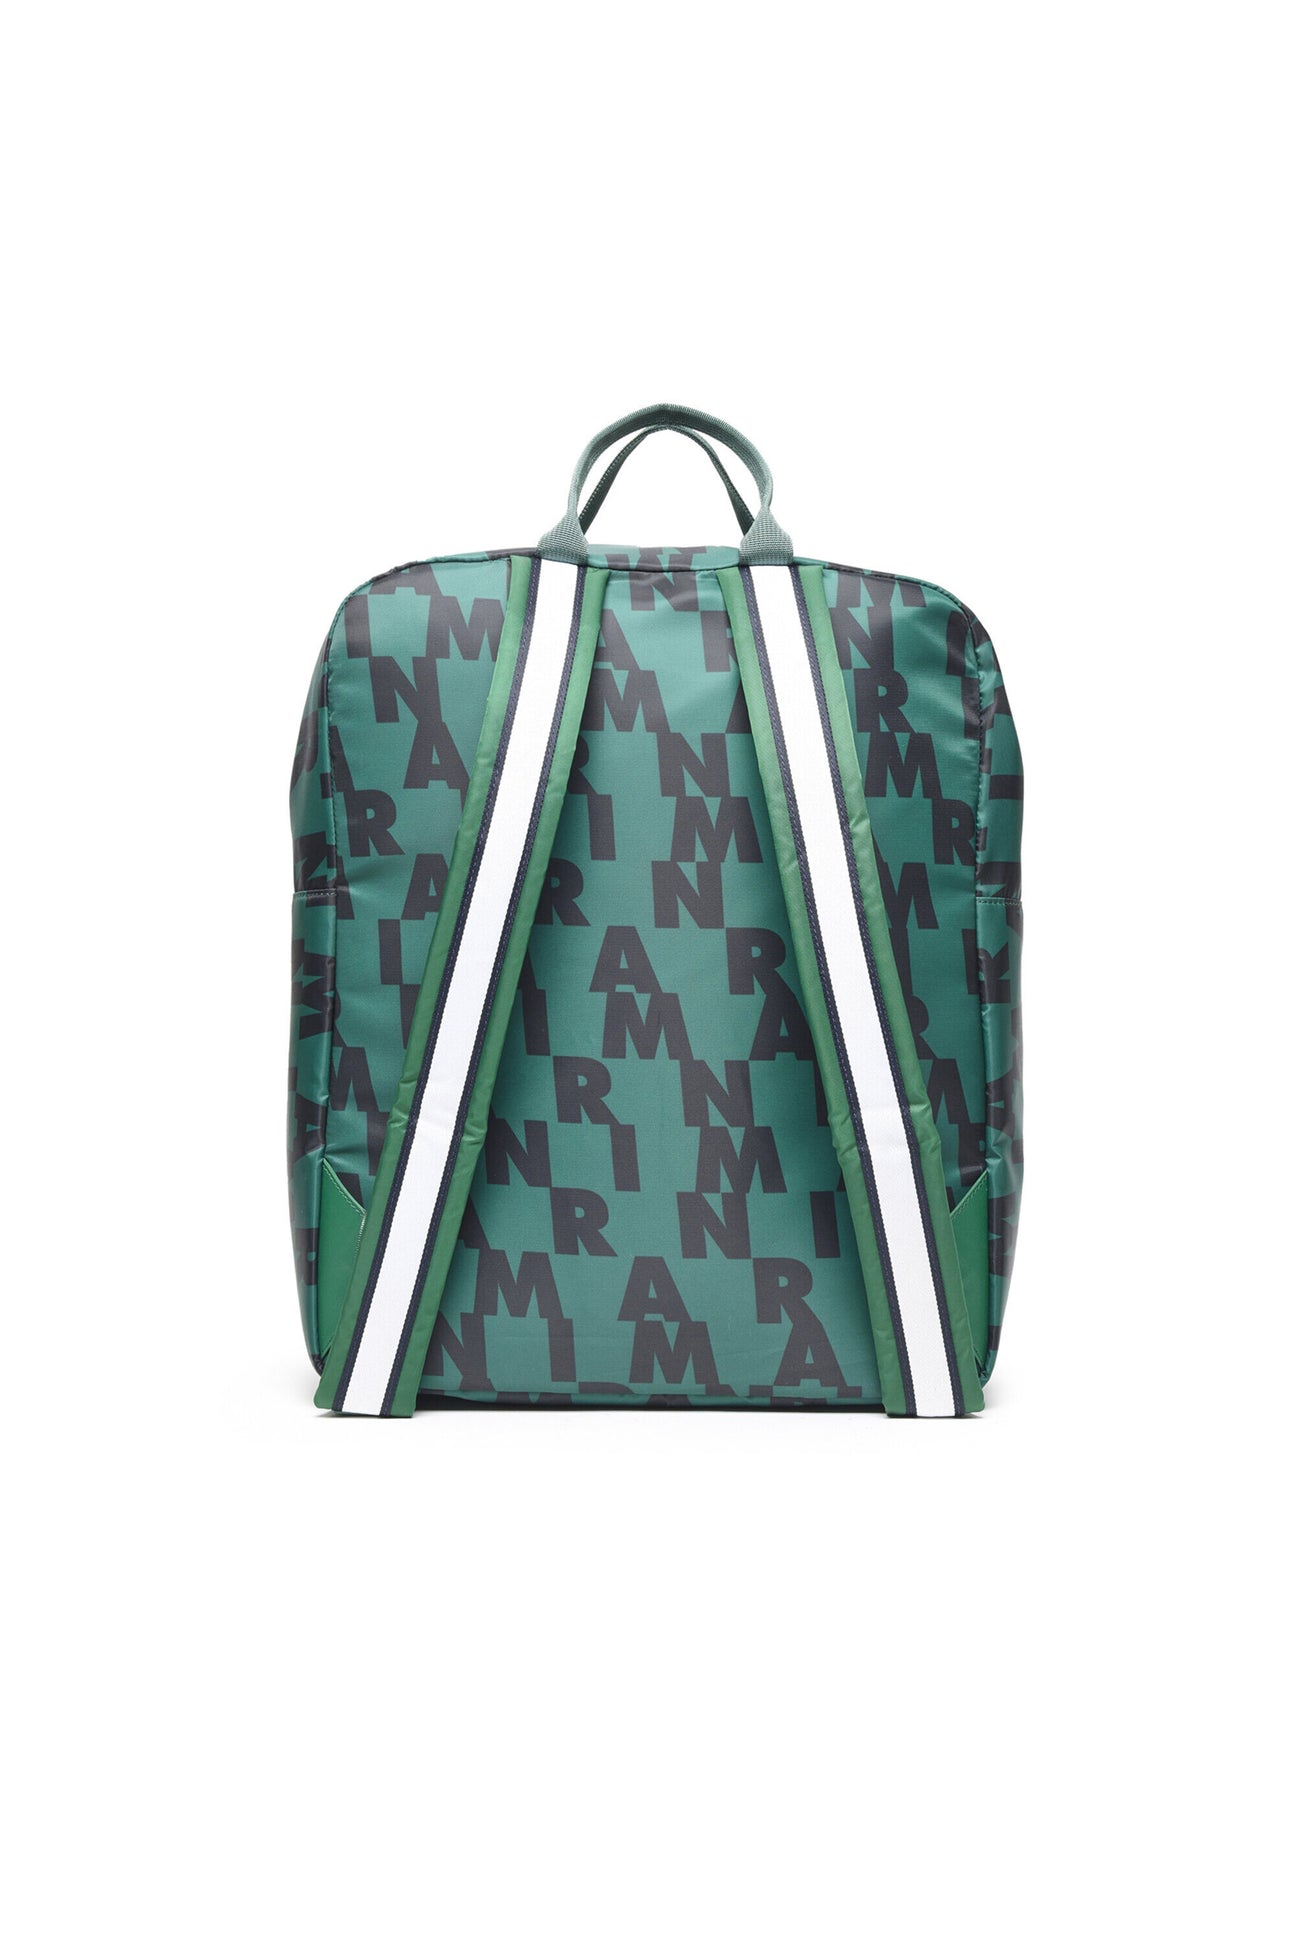 Marni allover patterned backpack Marni allover patterned backpack